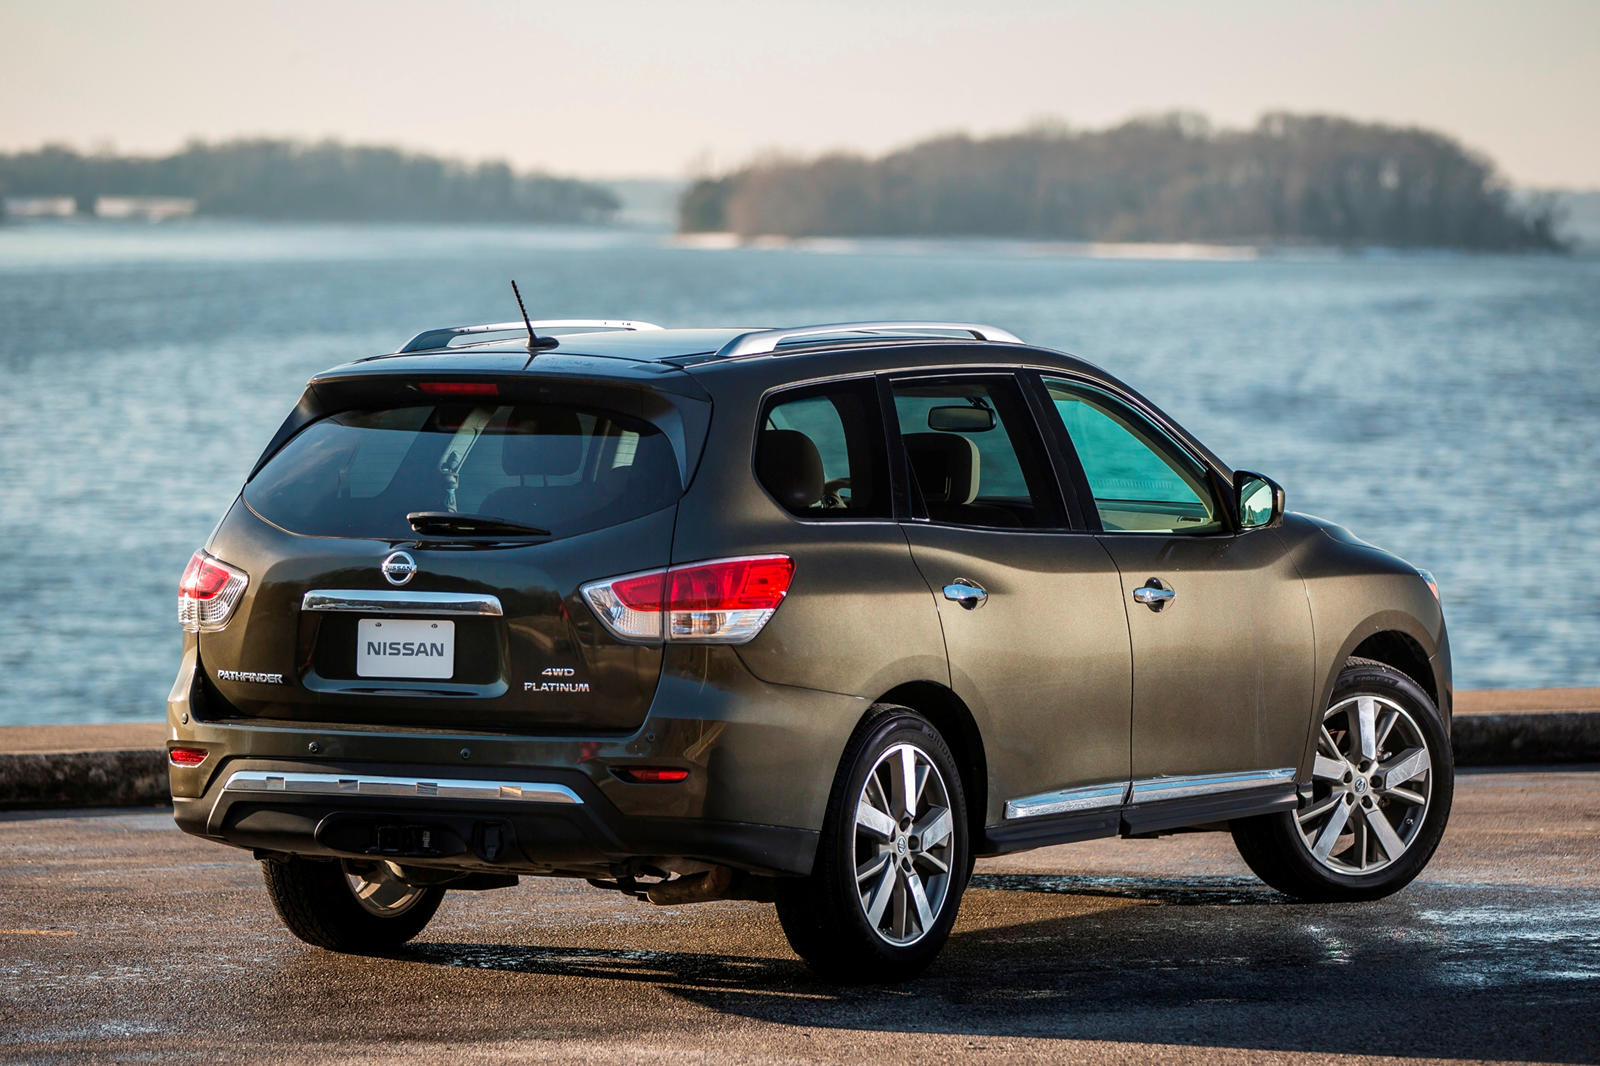 2015 Nissan Pathfinder Review, Trims, Specs, Price, New Interior